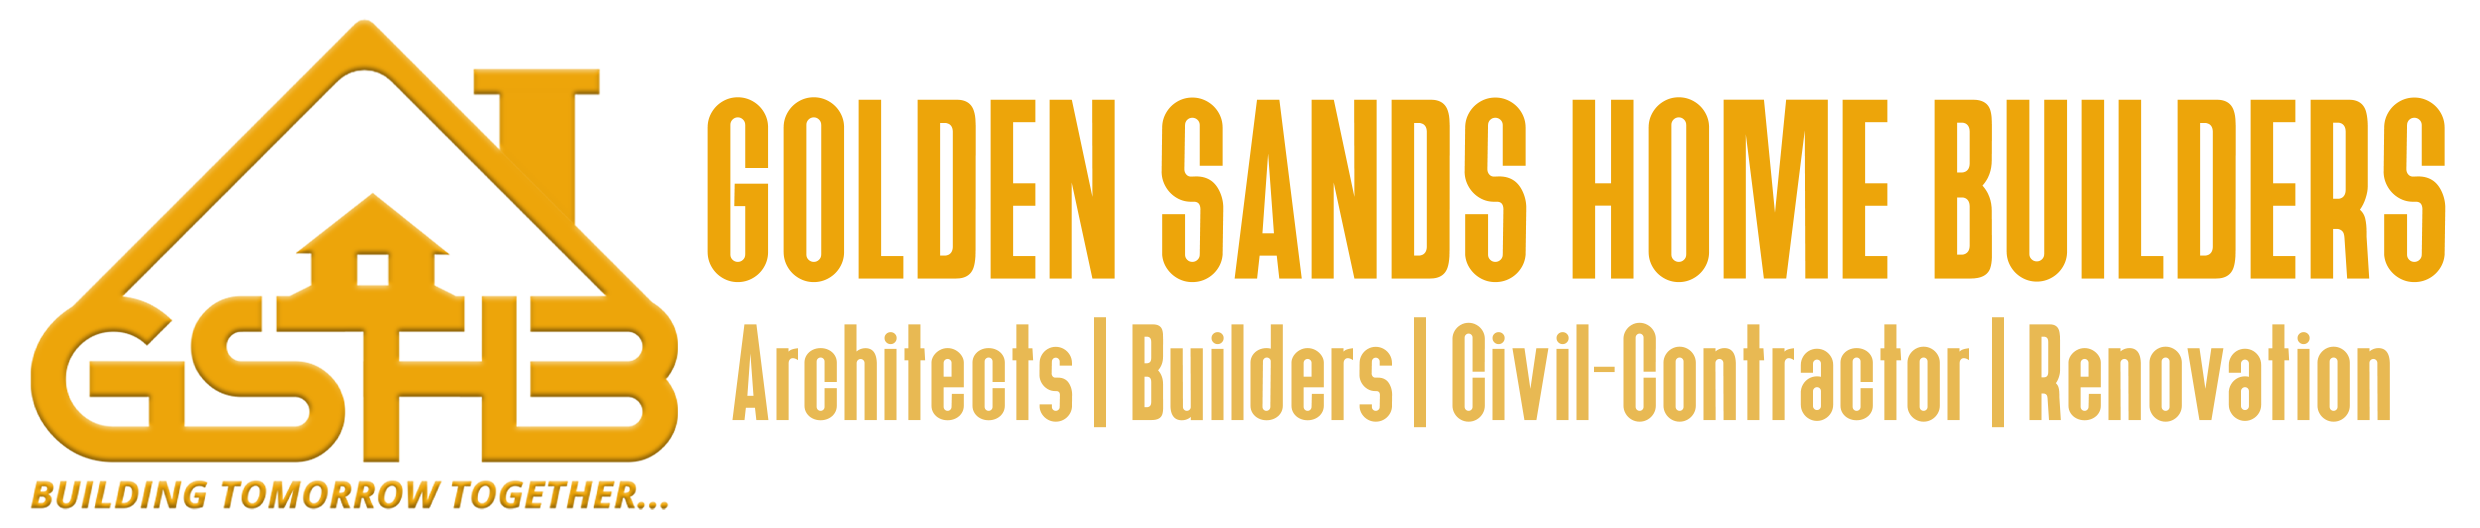 Golden Sands Home Builders - Architects | Builders | Civil-Contractor | Renovation